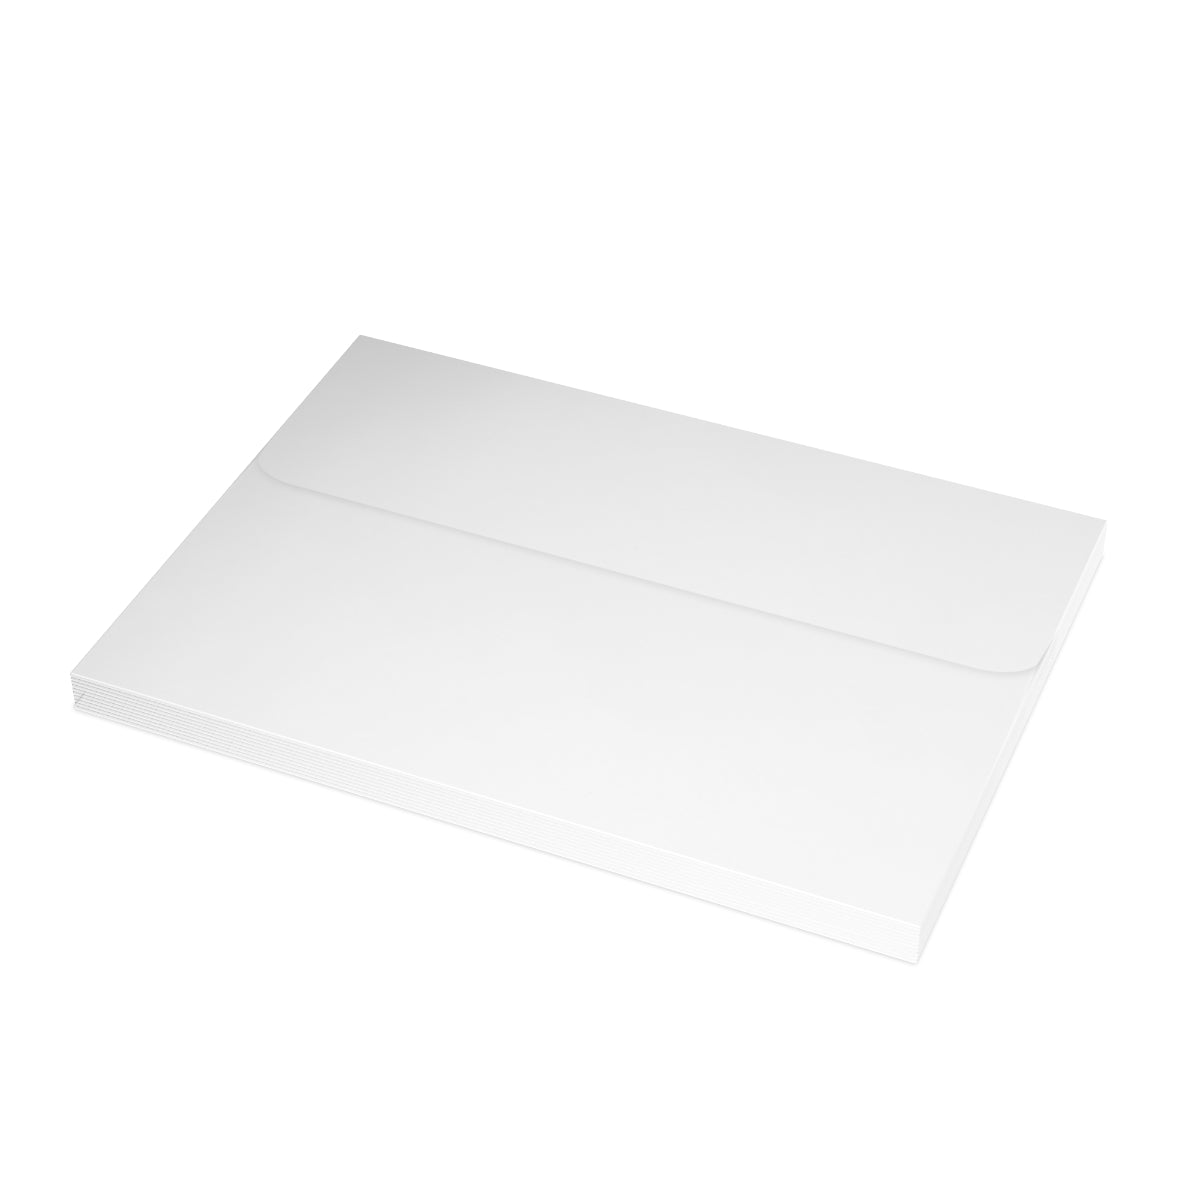 Idaho Folded Matte Notecards + Envelopes (10pcs)